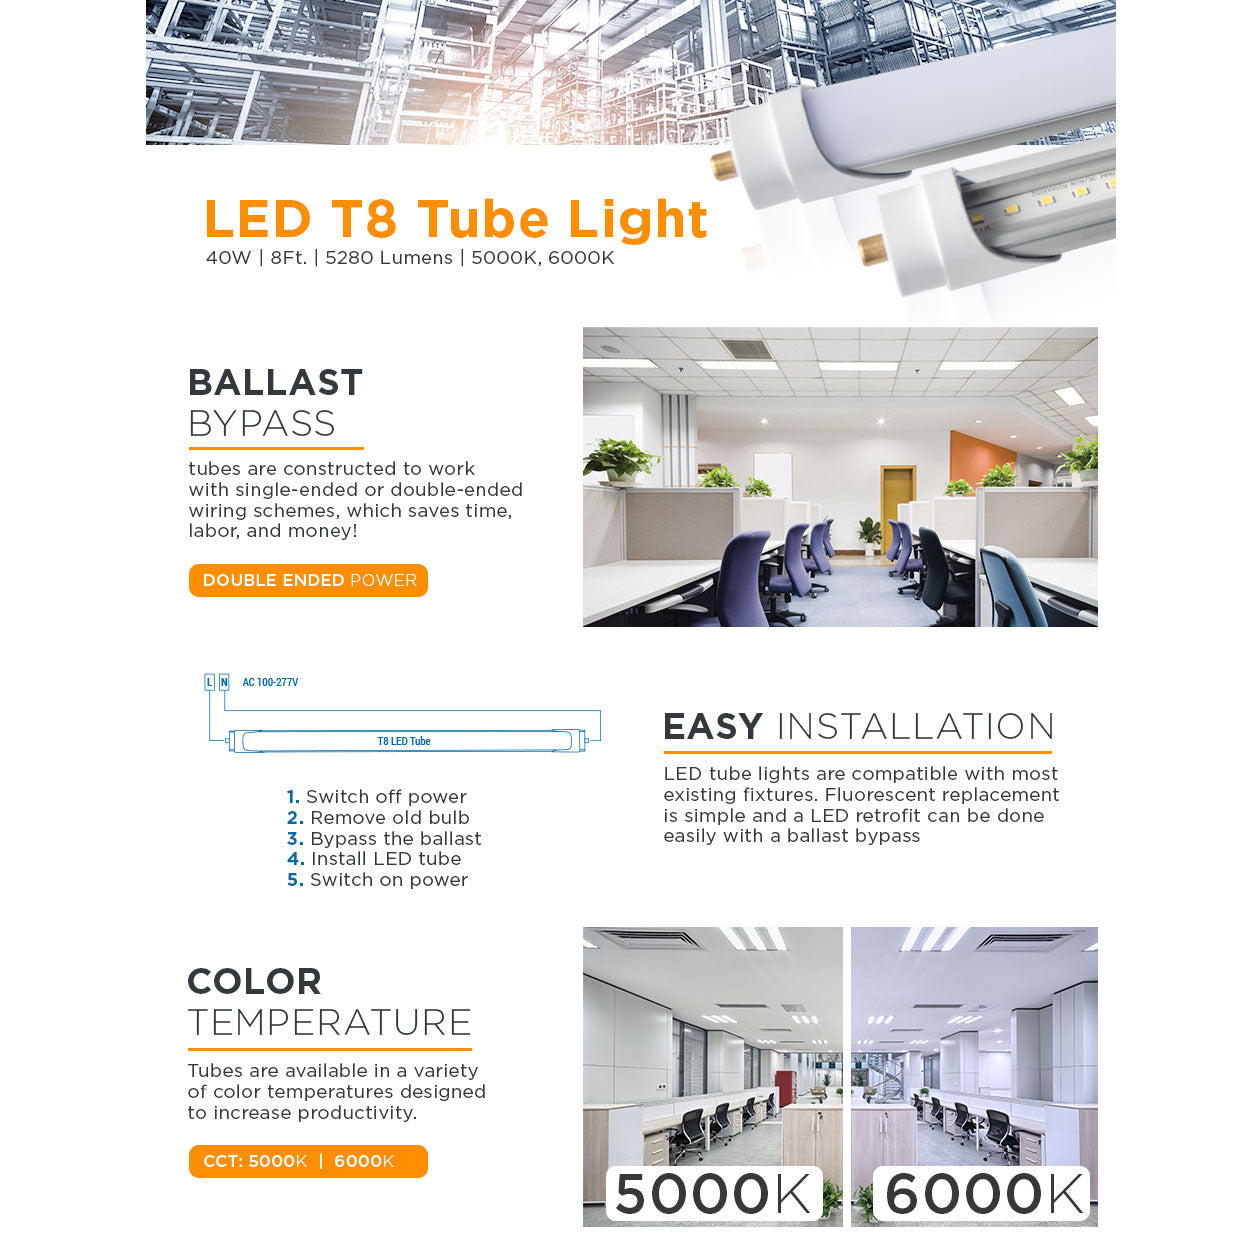 Led Tube Light 40watt – Pakistan's no1 Lighting brand.